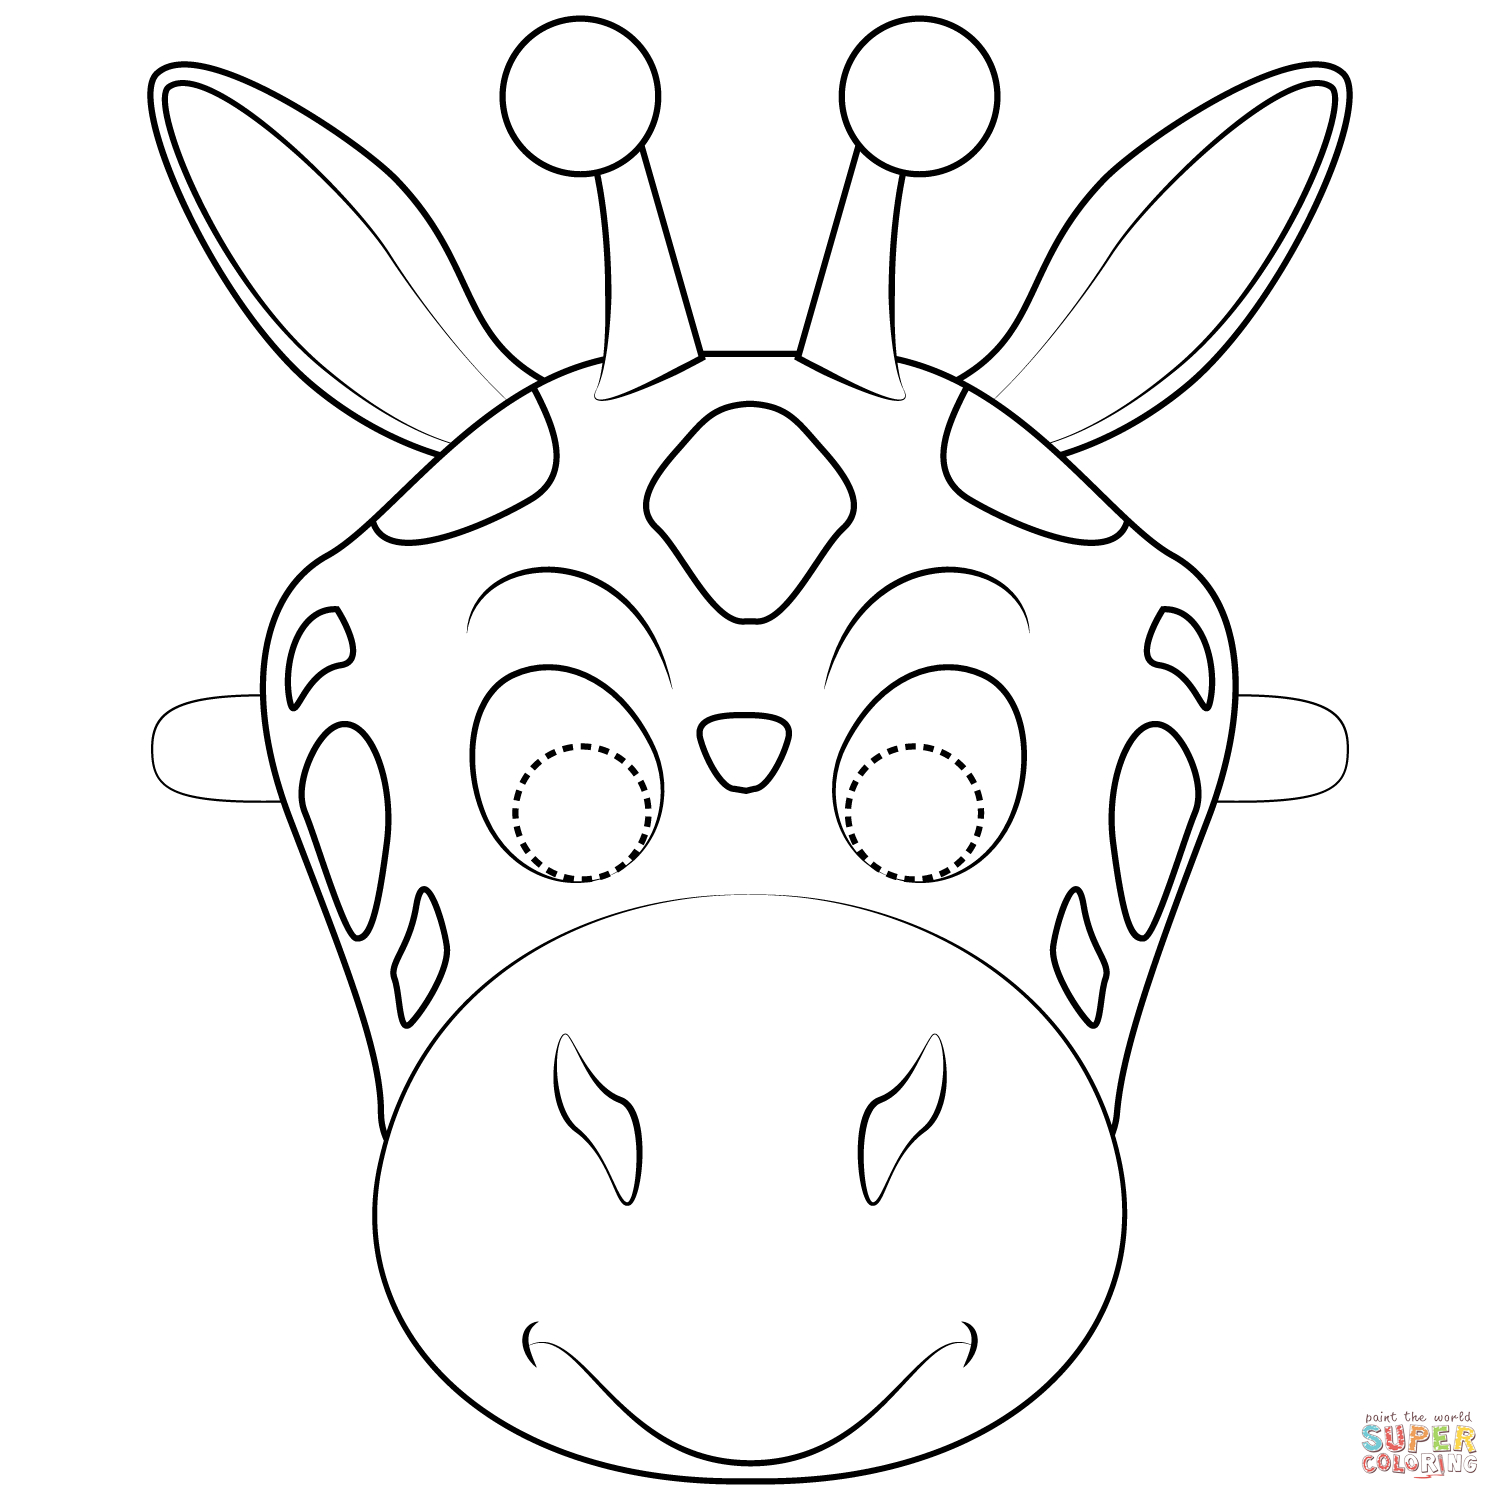 Giraffe Mask Coloring Page | Free Printable Coloring Pages - Giraffe Mask Template Printable Free